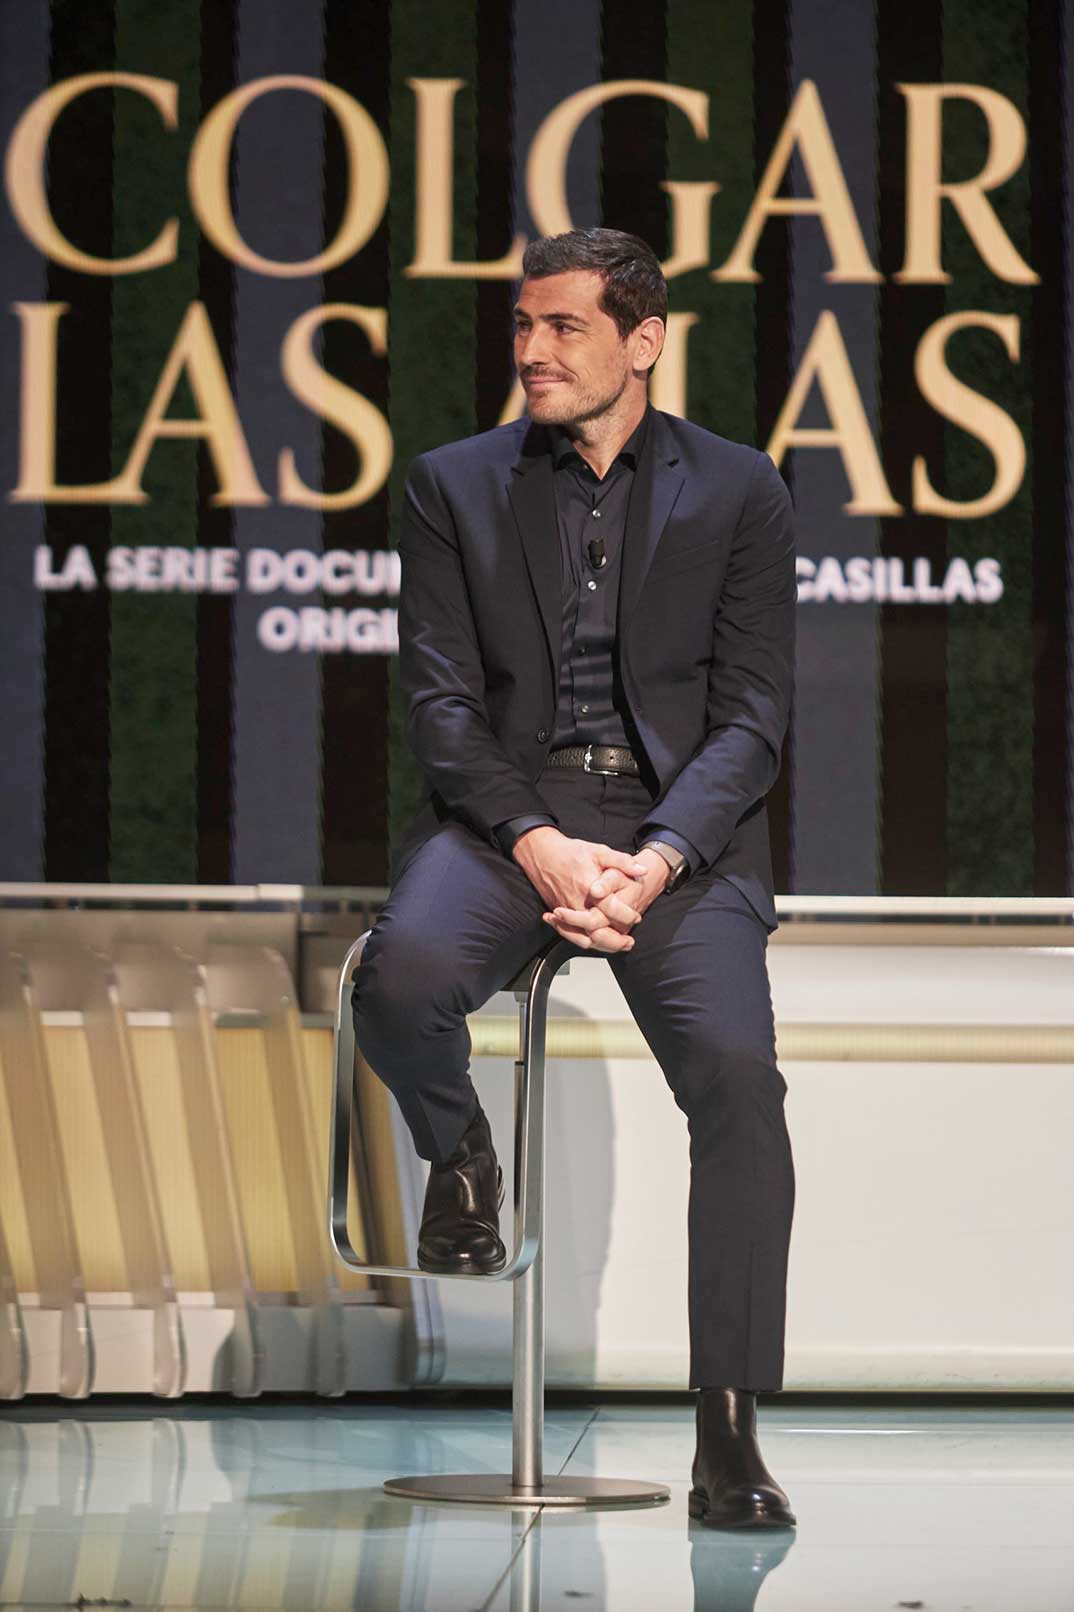 Iker Casillas - Colgar las alas © Movistar+